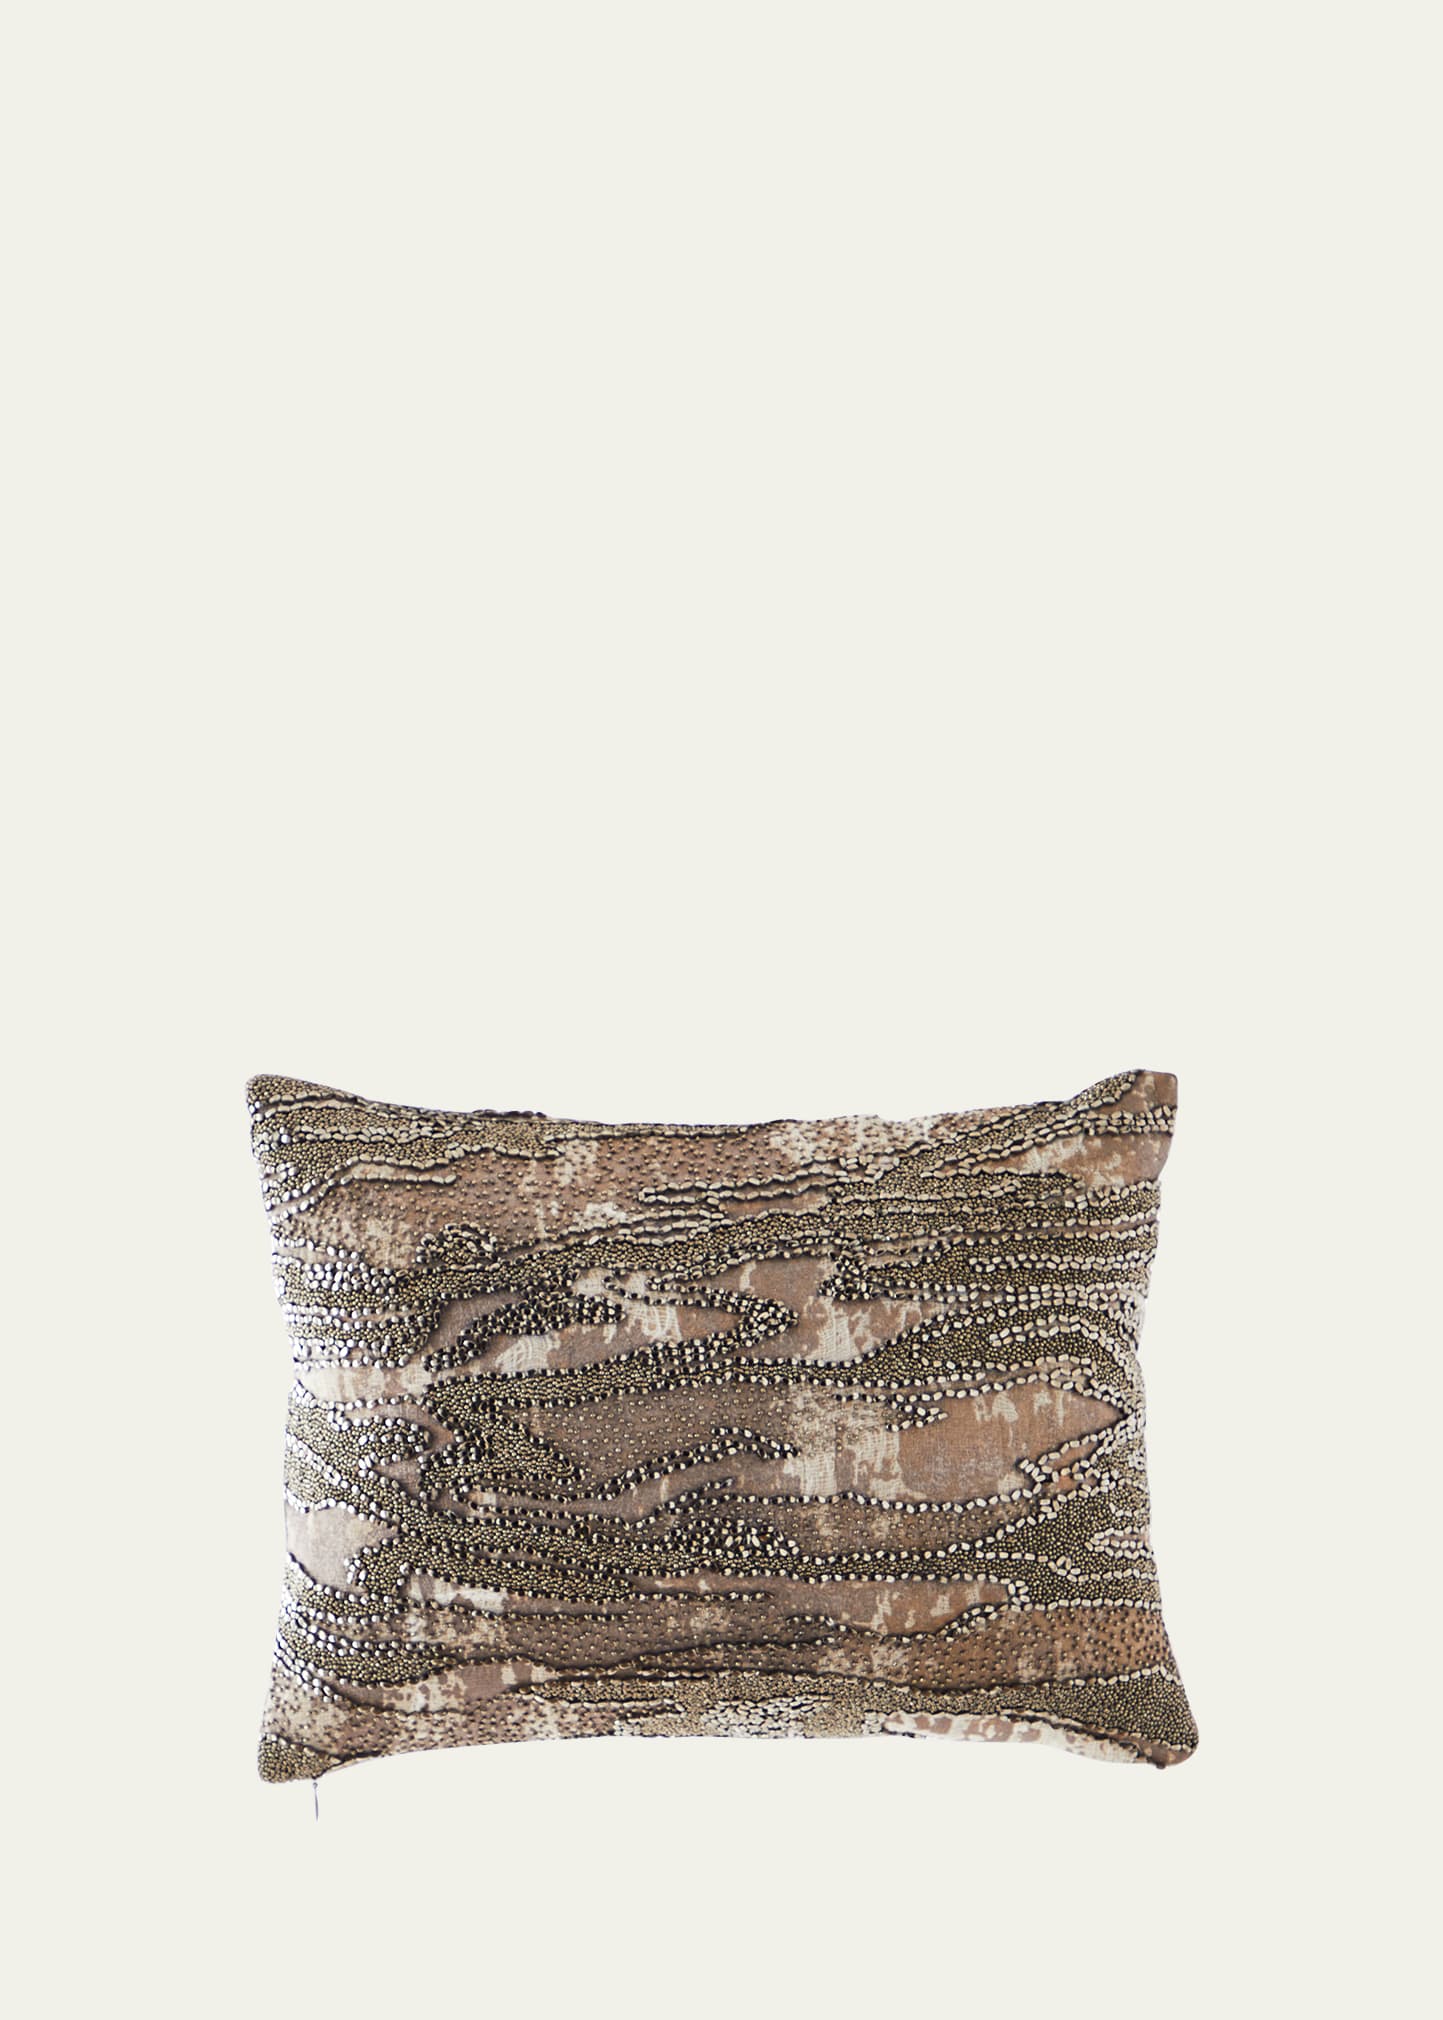 Moire Beaded 12" x 16" Decorative Pillow